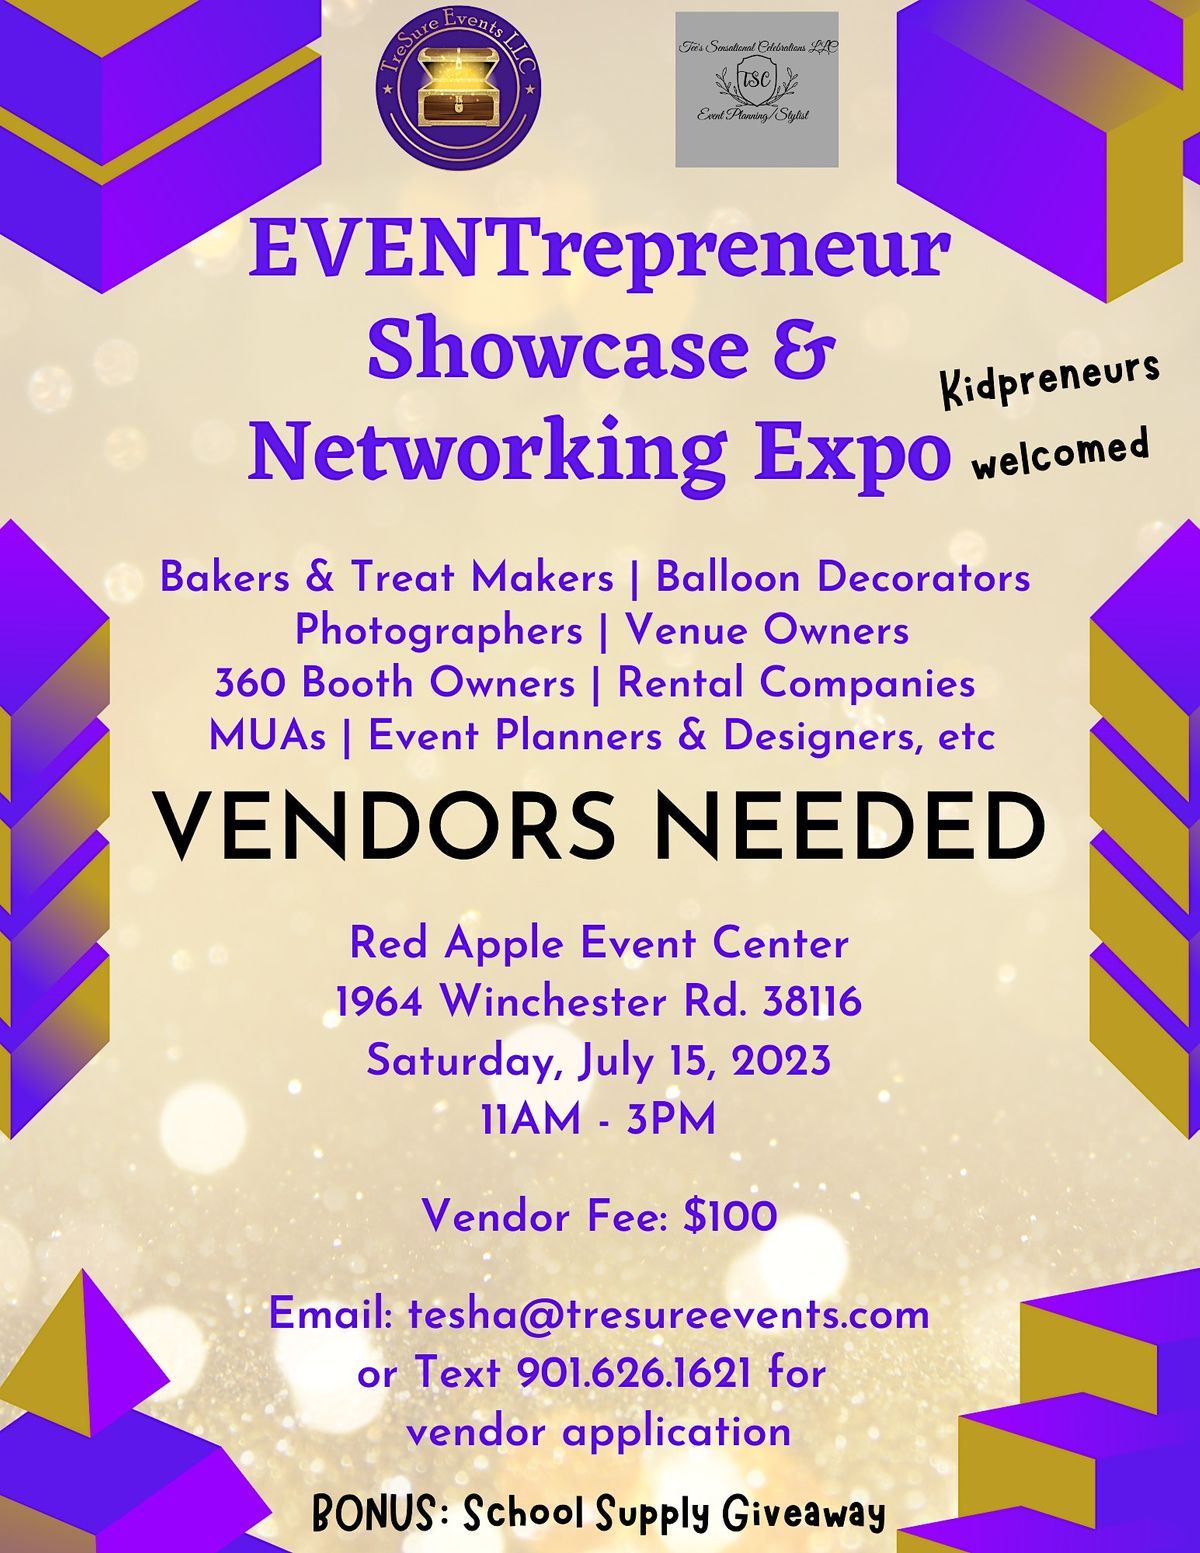 EVENTrepreneur Showcase & Networking Expo